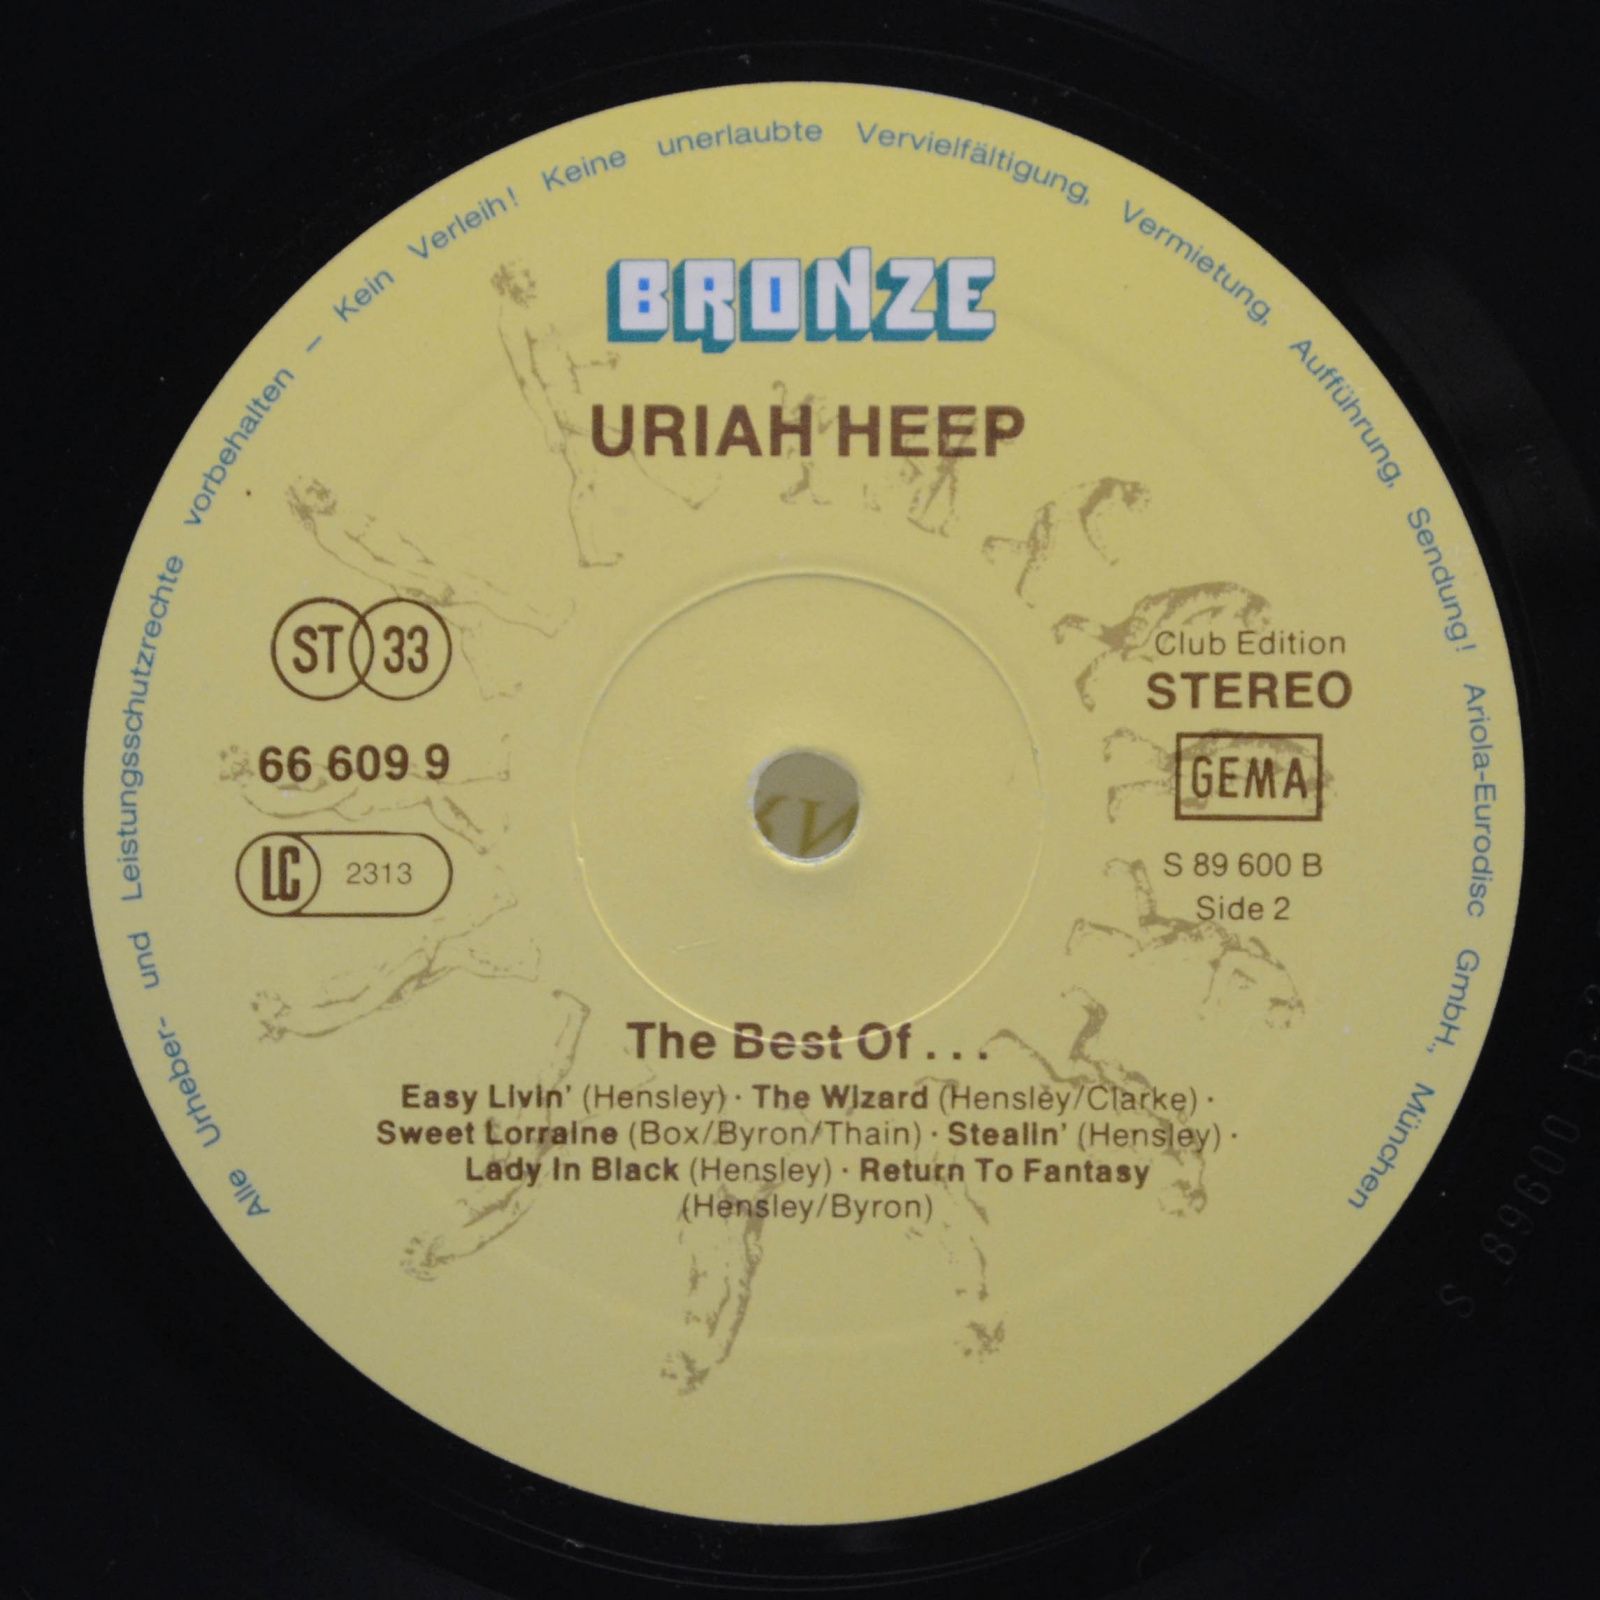 Uriah Heep — The Best Of..., 1975